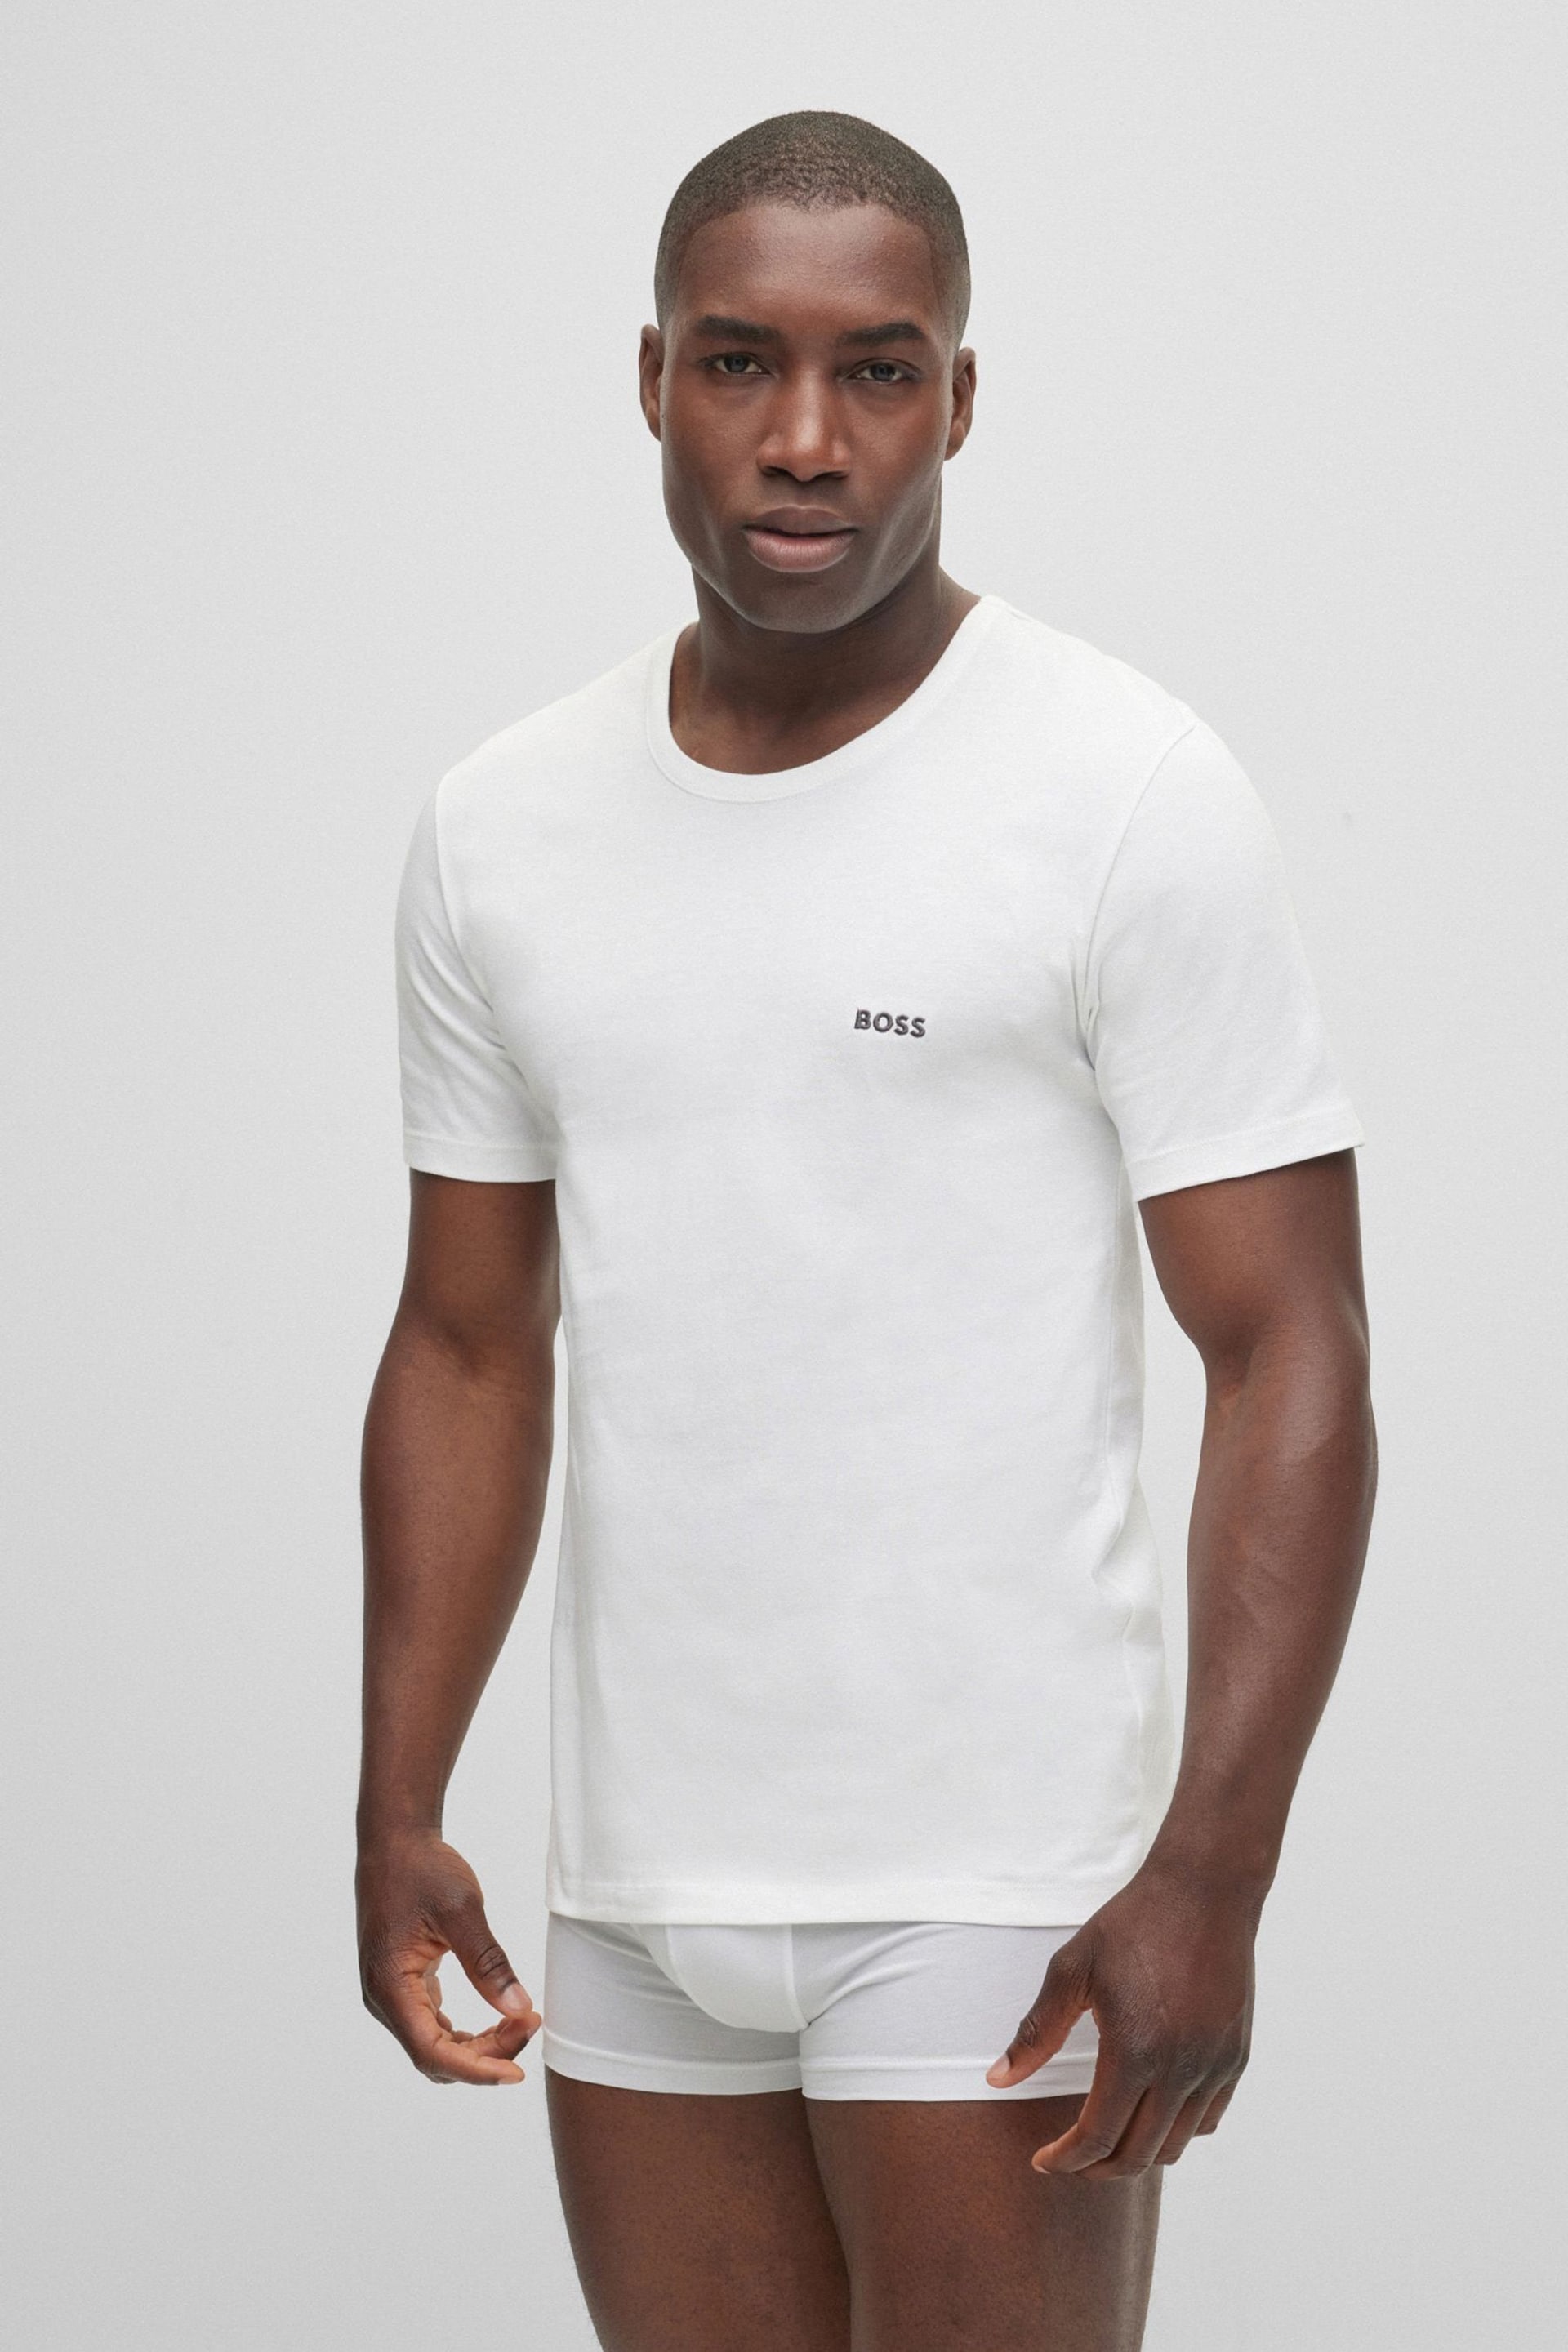 BOSS Black/Grey/White T-Shirt Classic T-Shirts 3 Pack - Image 7 of 9